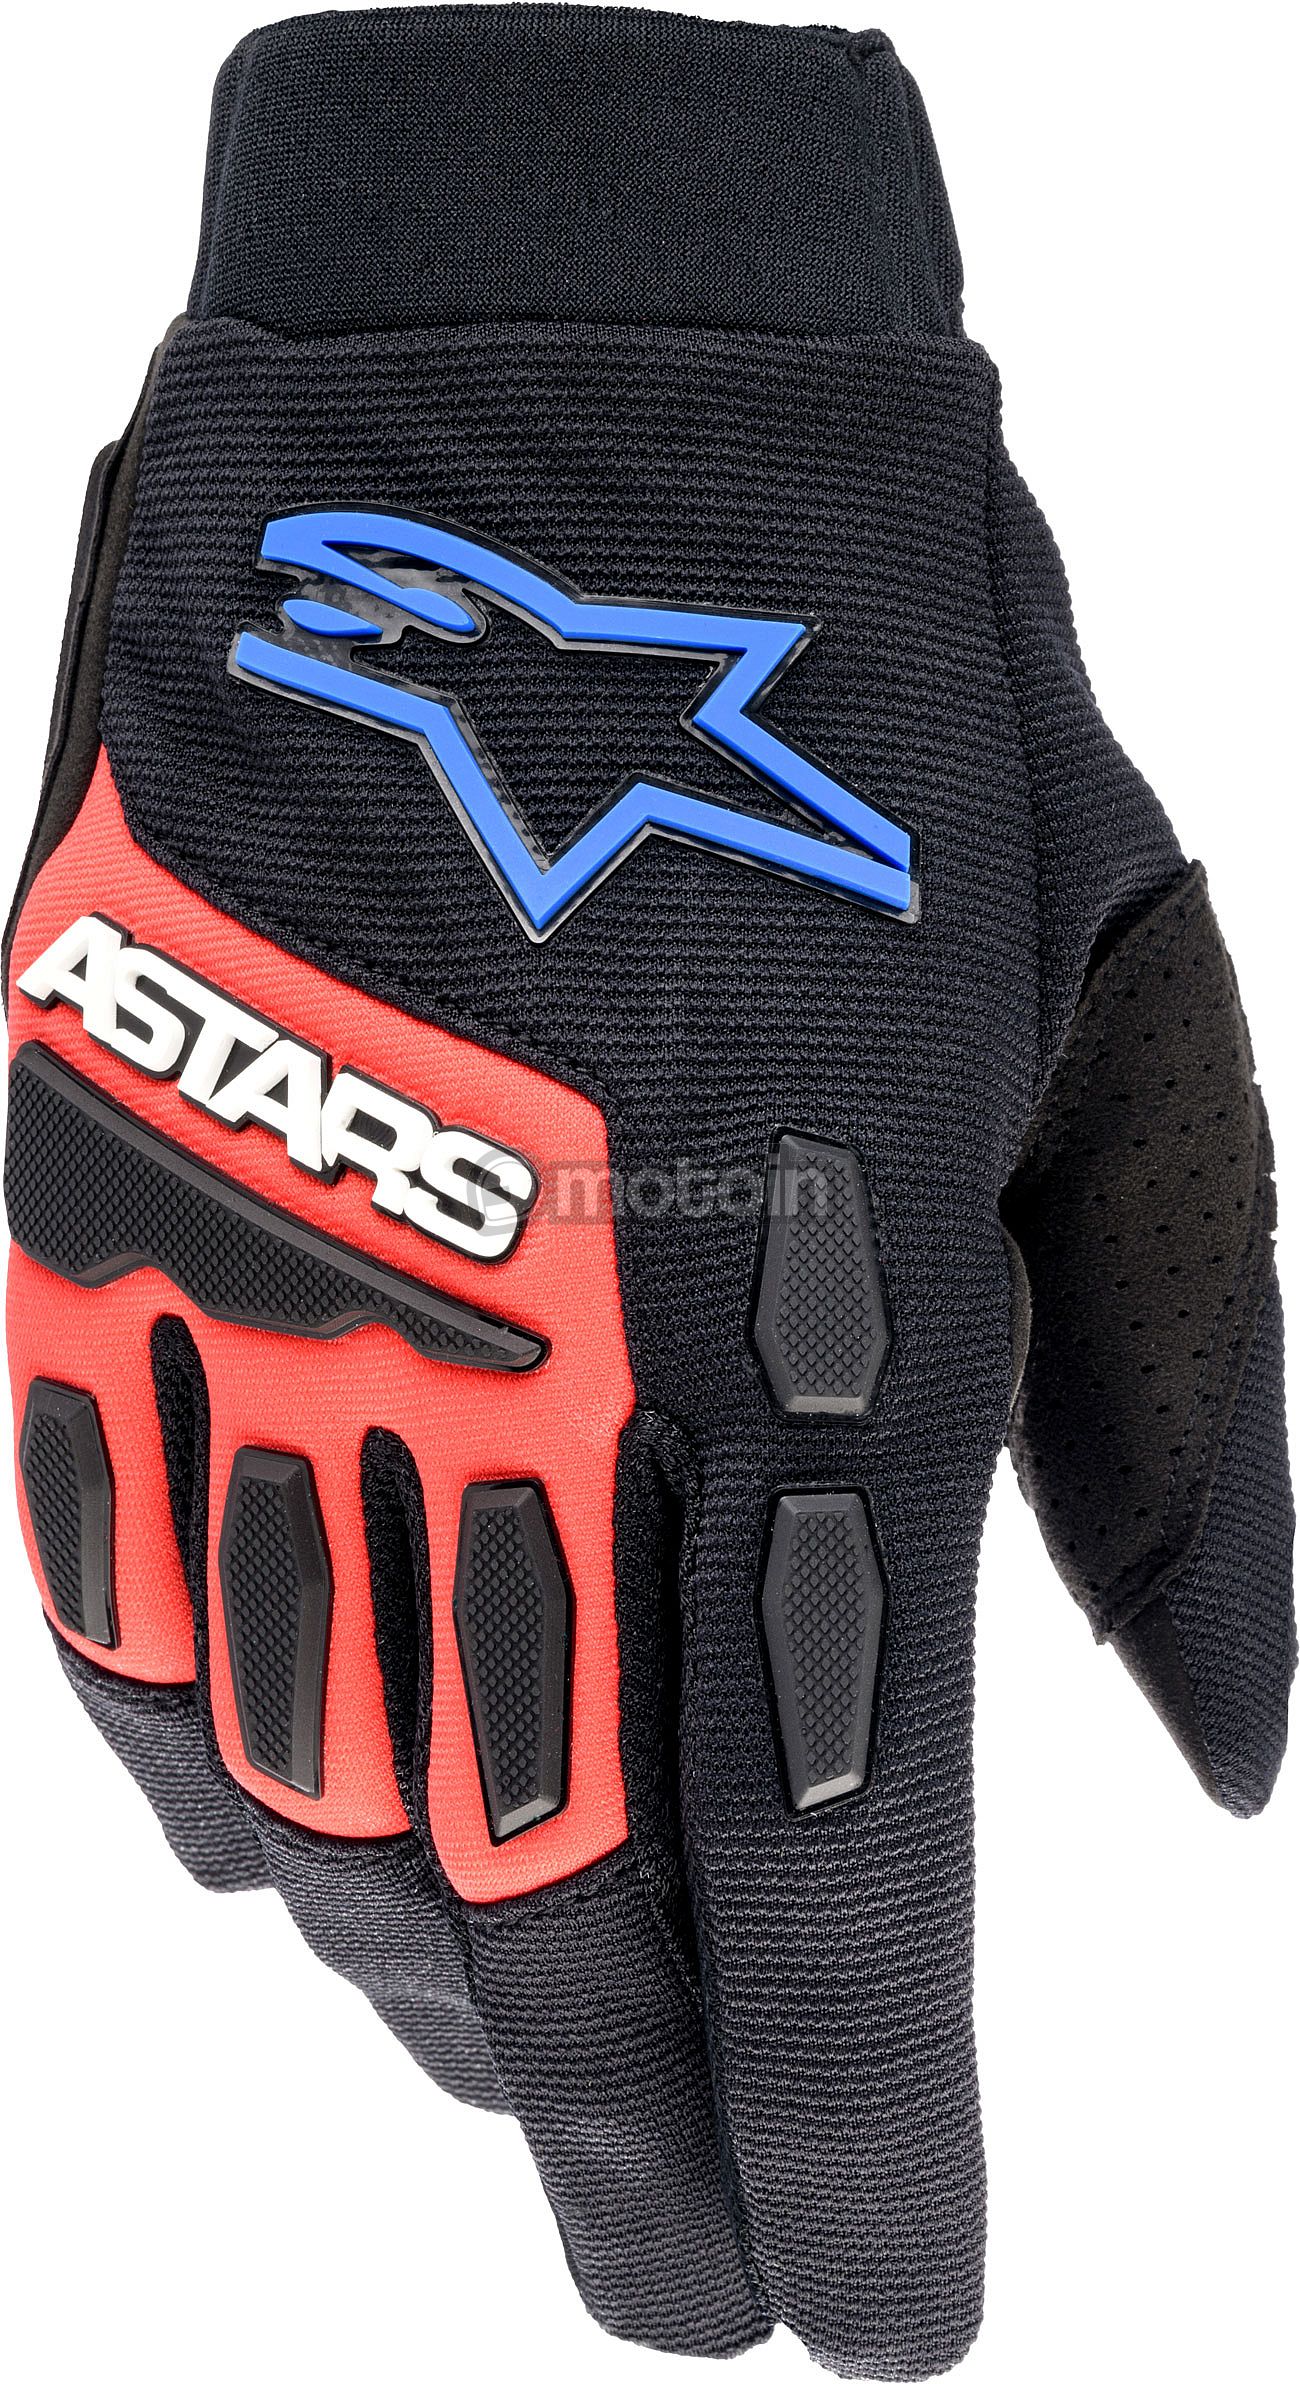 Alpinestars Full Bore XT S23, перчатки